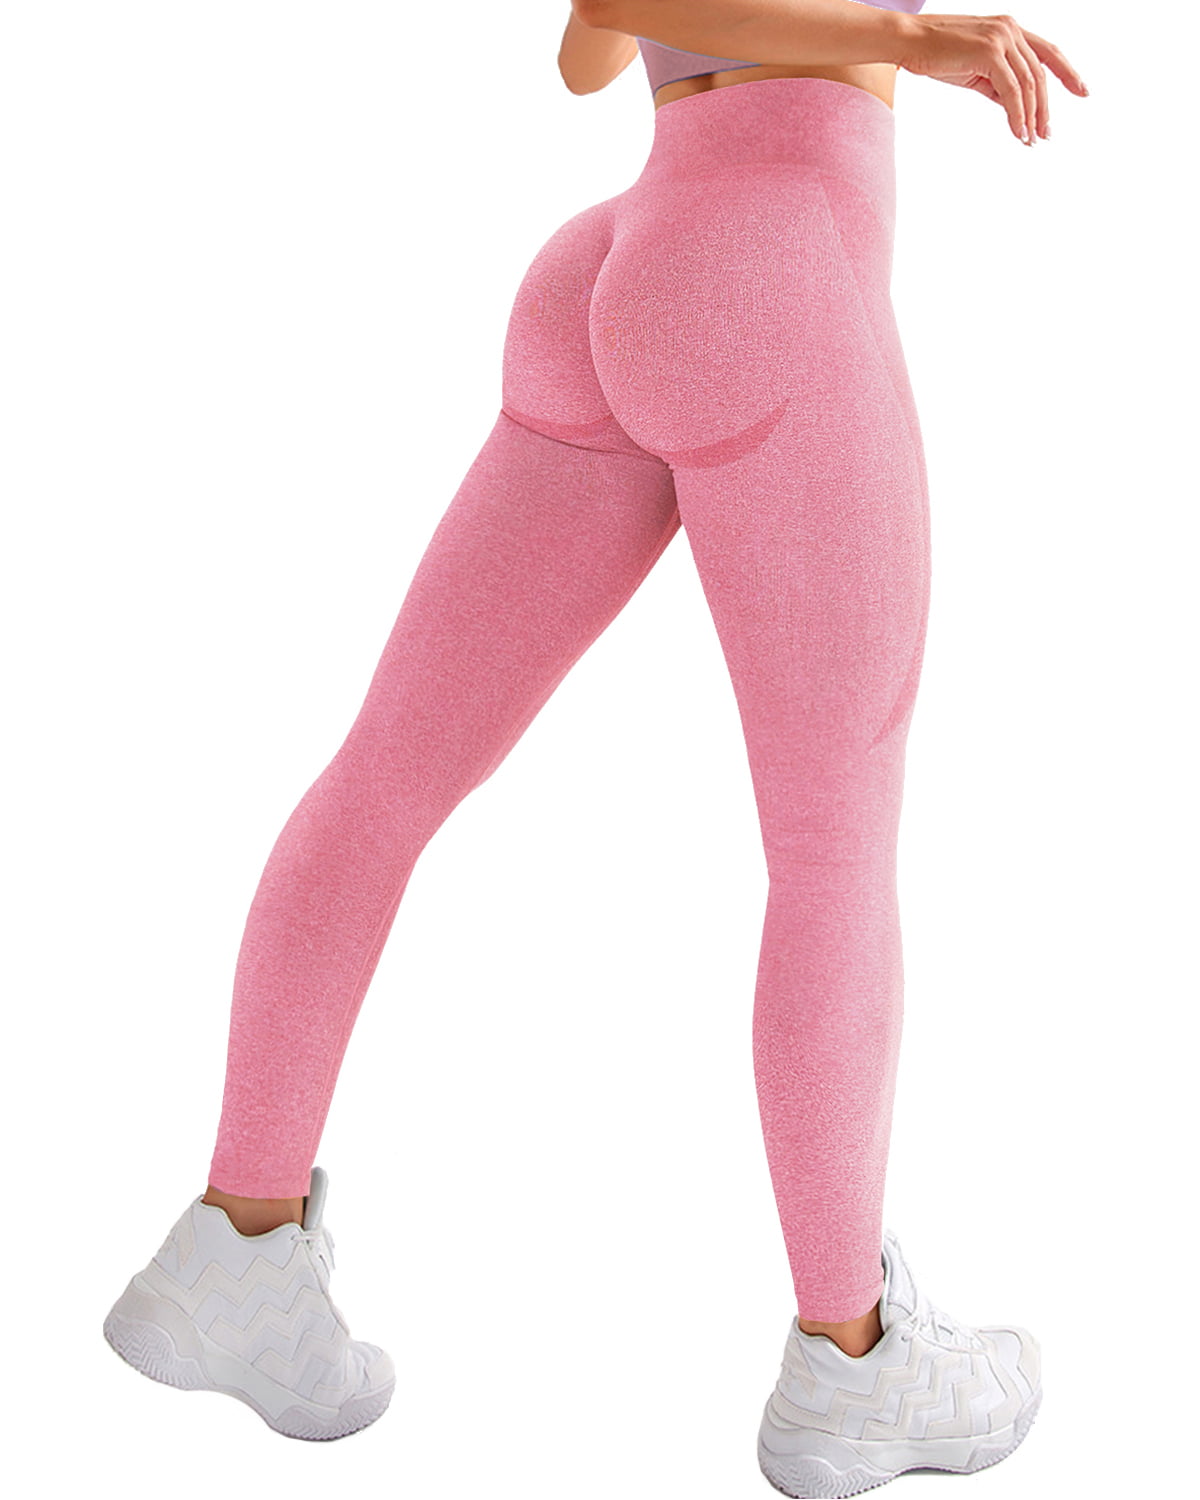 SEASUM Women High Waisted Seamless Leggings Smile Contour Workout Gym Yoga Pants Tights 